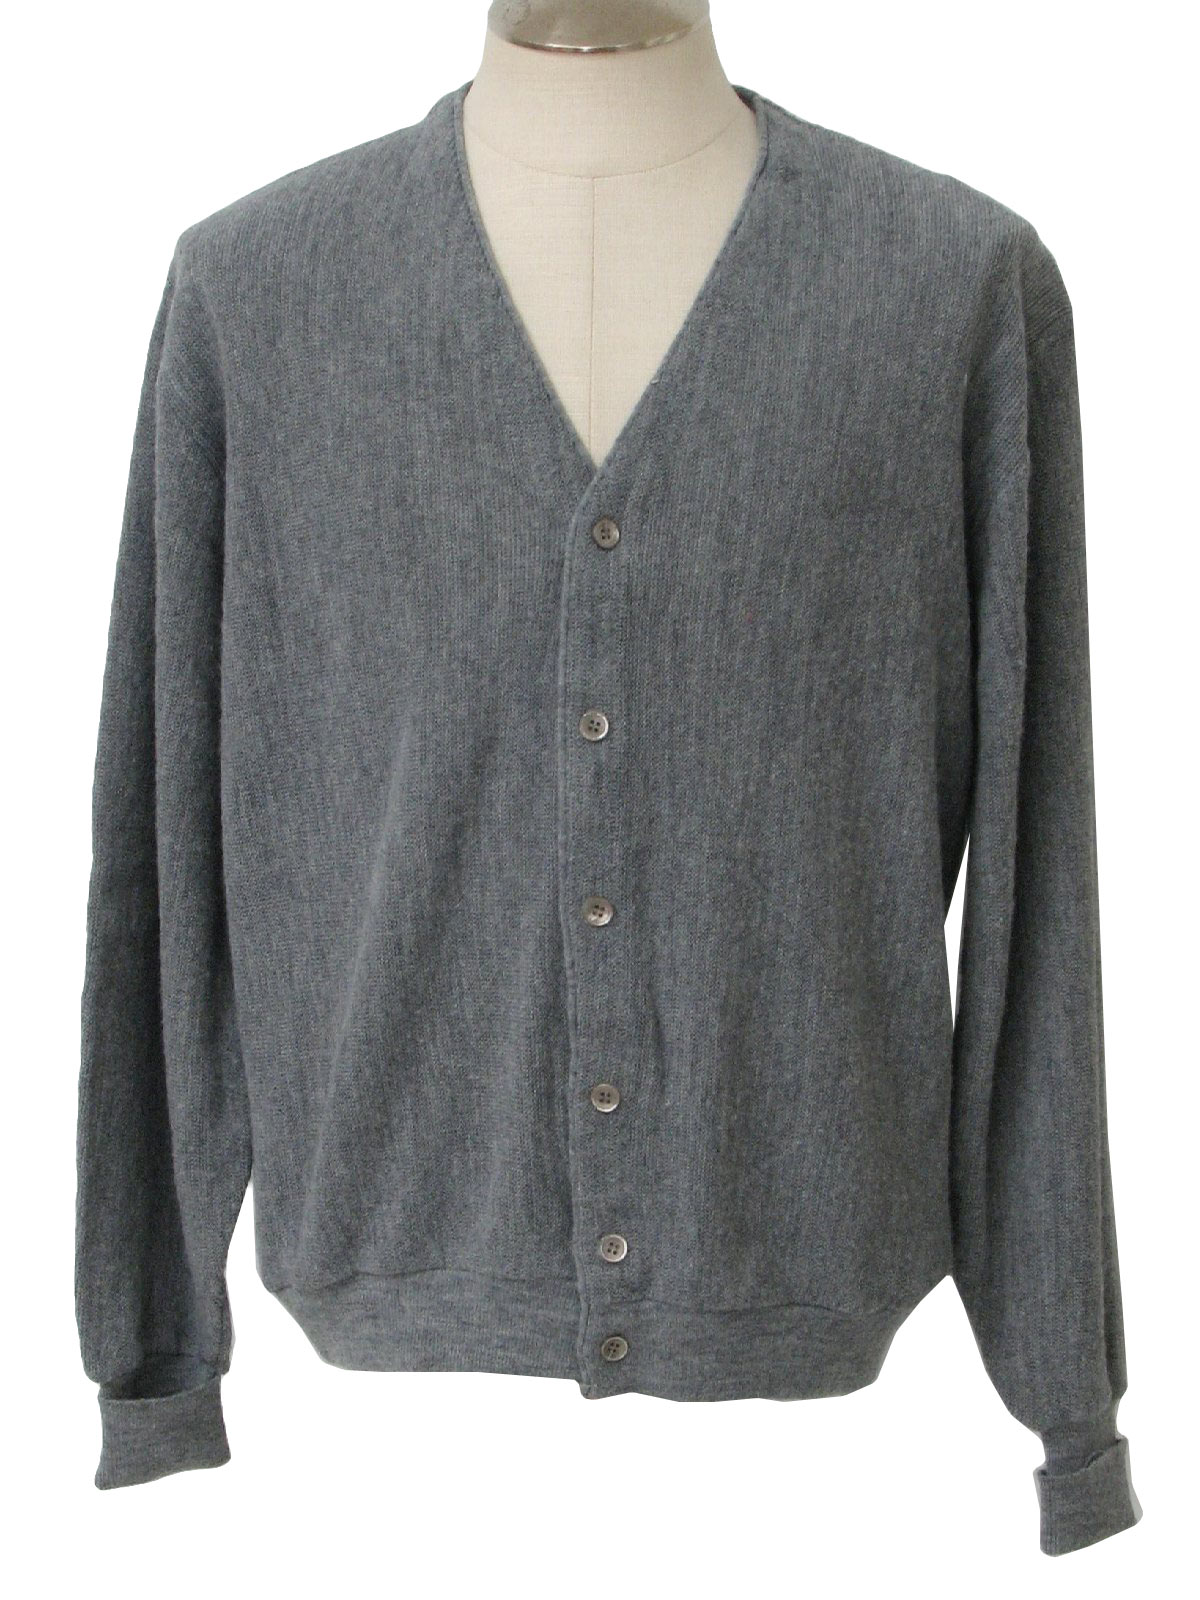 Vintage Jantzen 1980s Caridgan Sweater: 80s -Jantzen- Mens heather grey ...